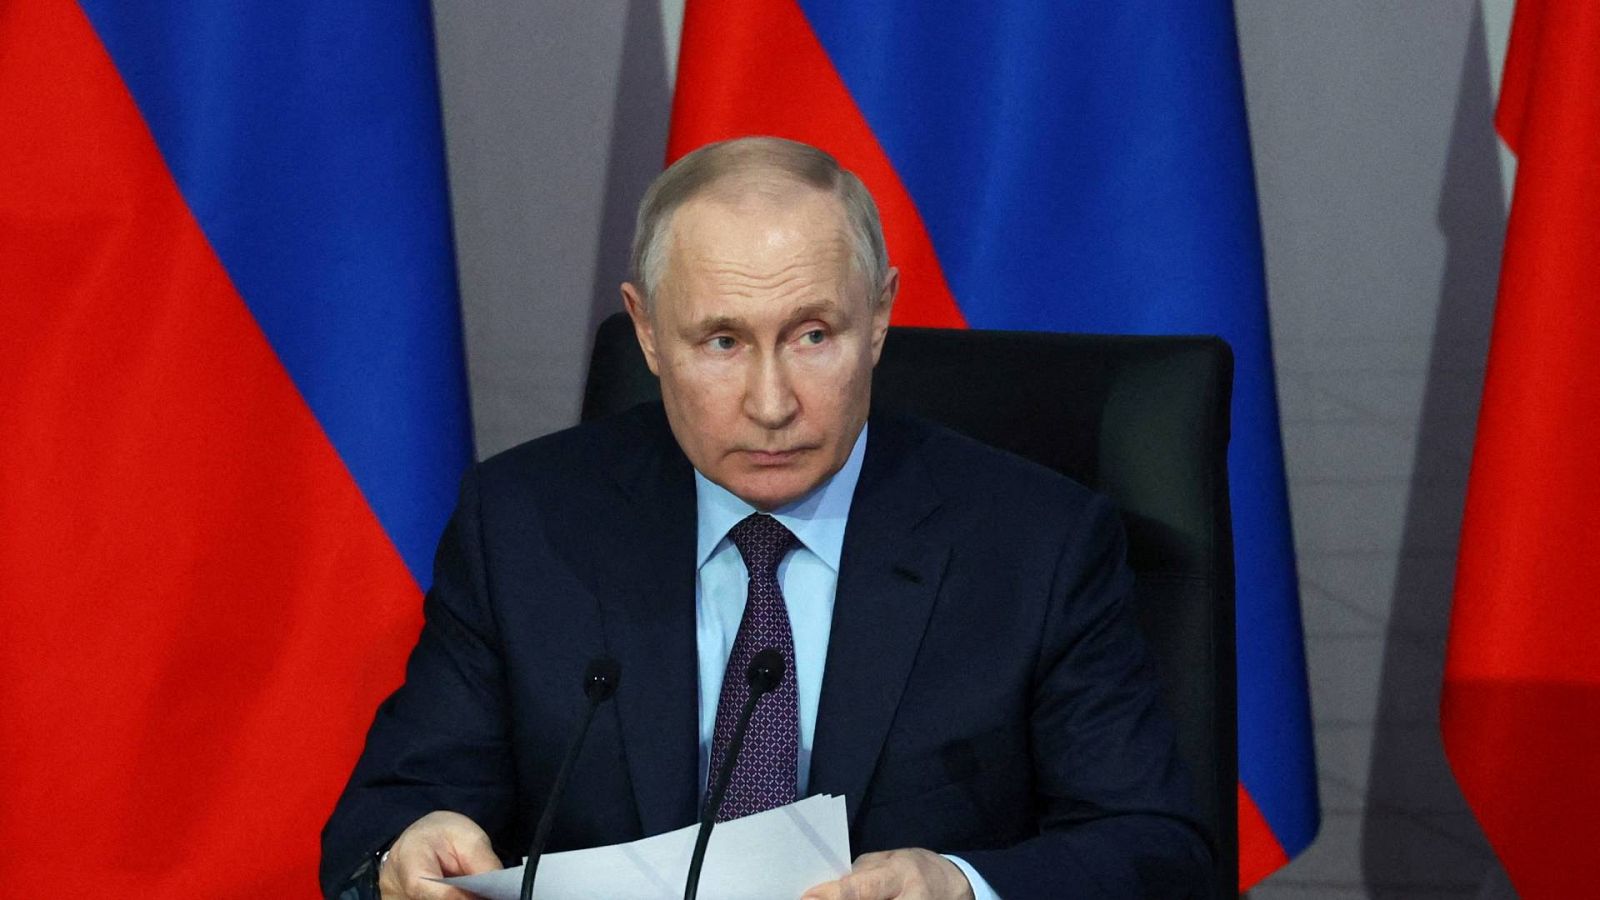 El presidente ruso, Vladímir Putin, en una imagen de archivo. Foto: Sputnik/Mikhail Klimentyev/Kremlin vía REUTERS 